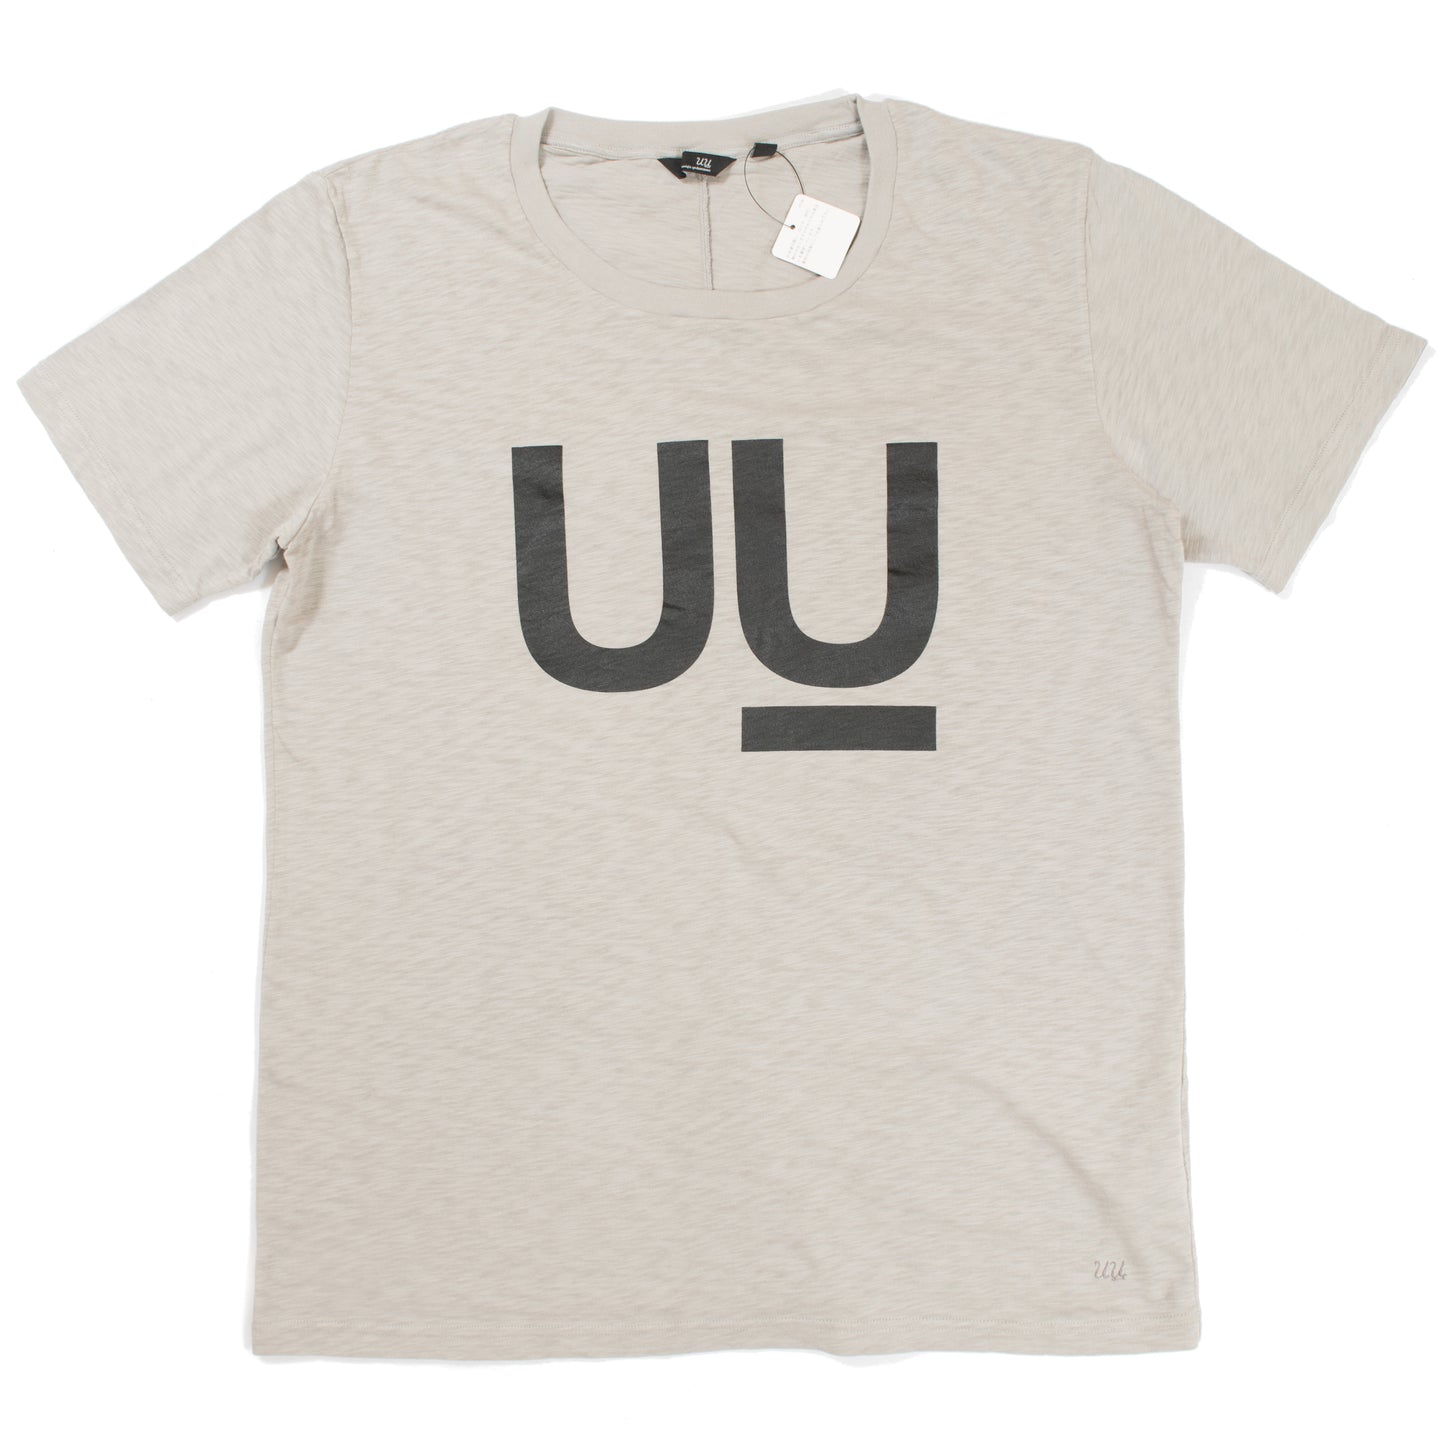 Undercover x Uniqlo "UU" Logo T-Shirt